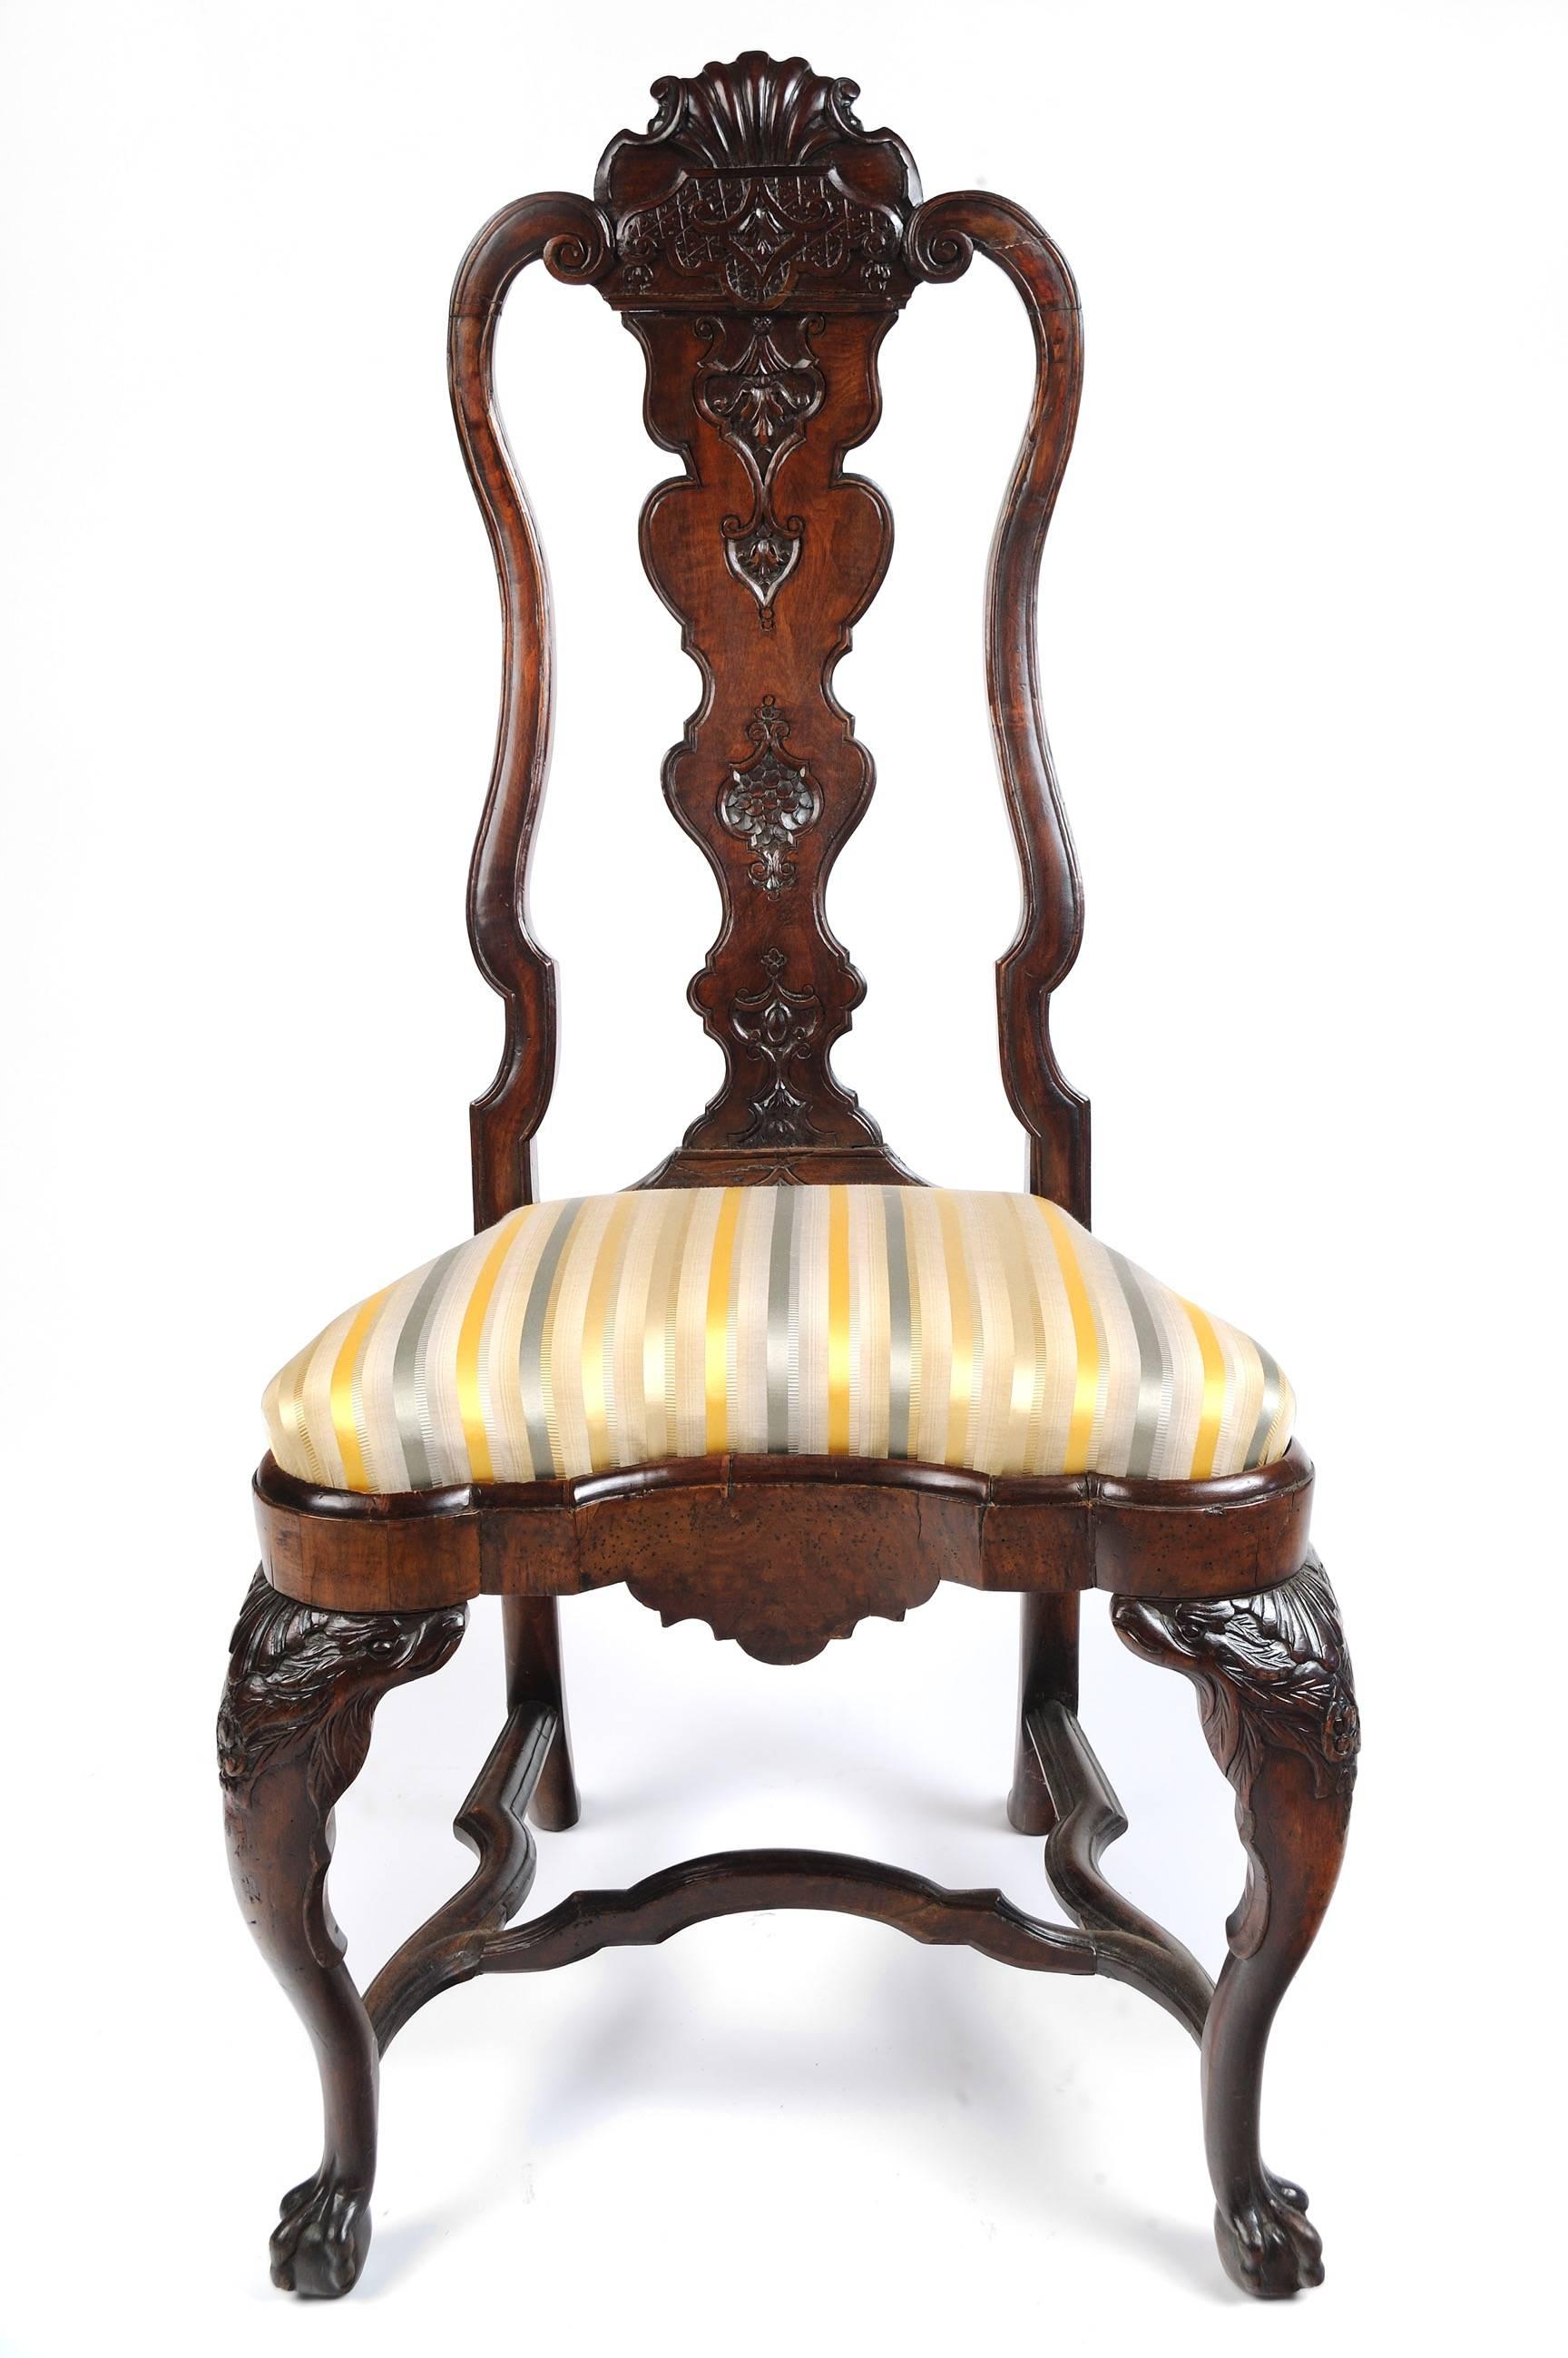 Portuguese Rococo walnut side chair
Portugal, circa 1745 
Carved walnut 
Measures: 45